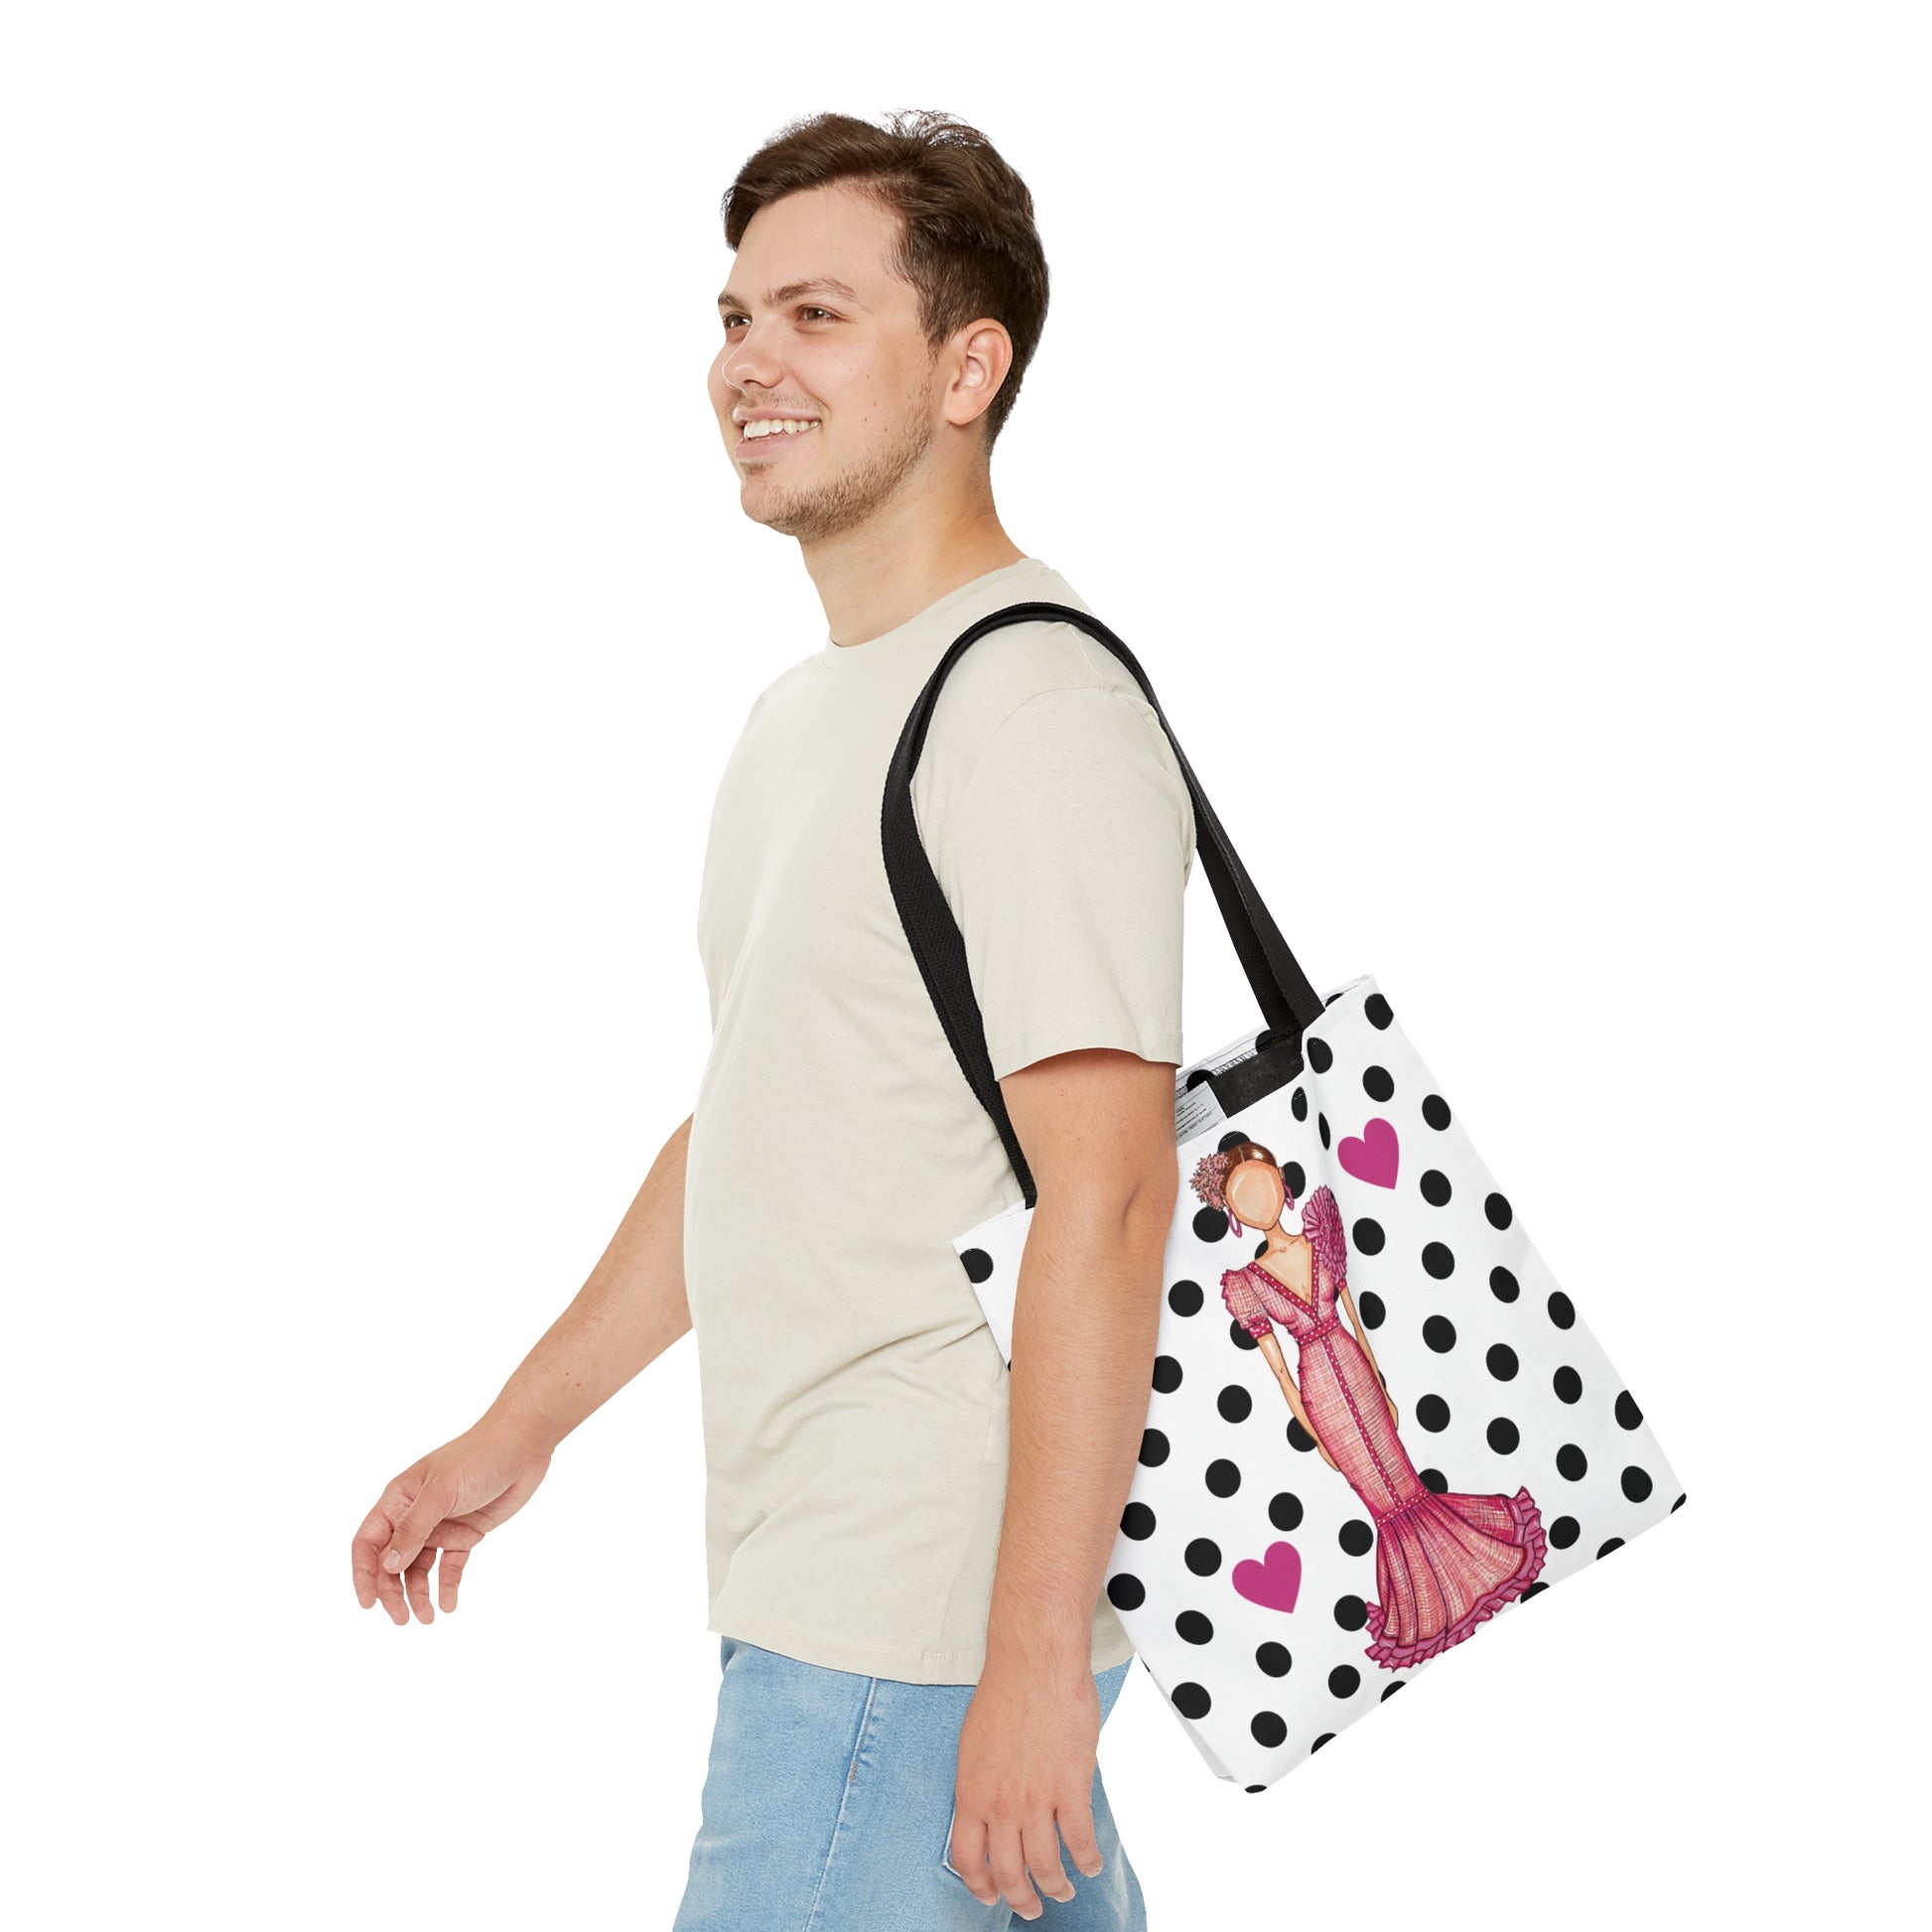 a man walking with a polka dot bag on his shoulder